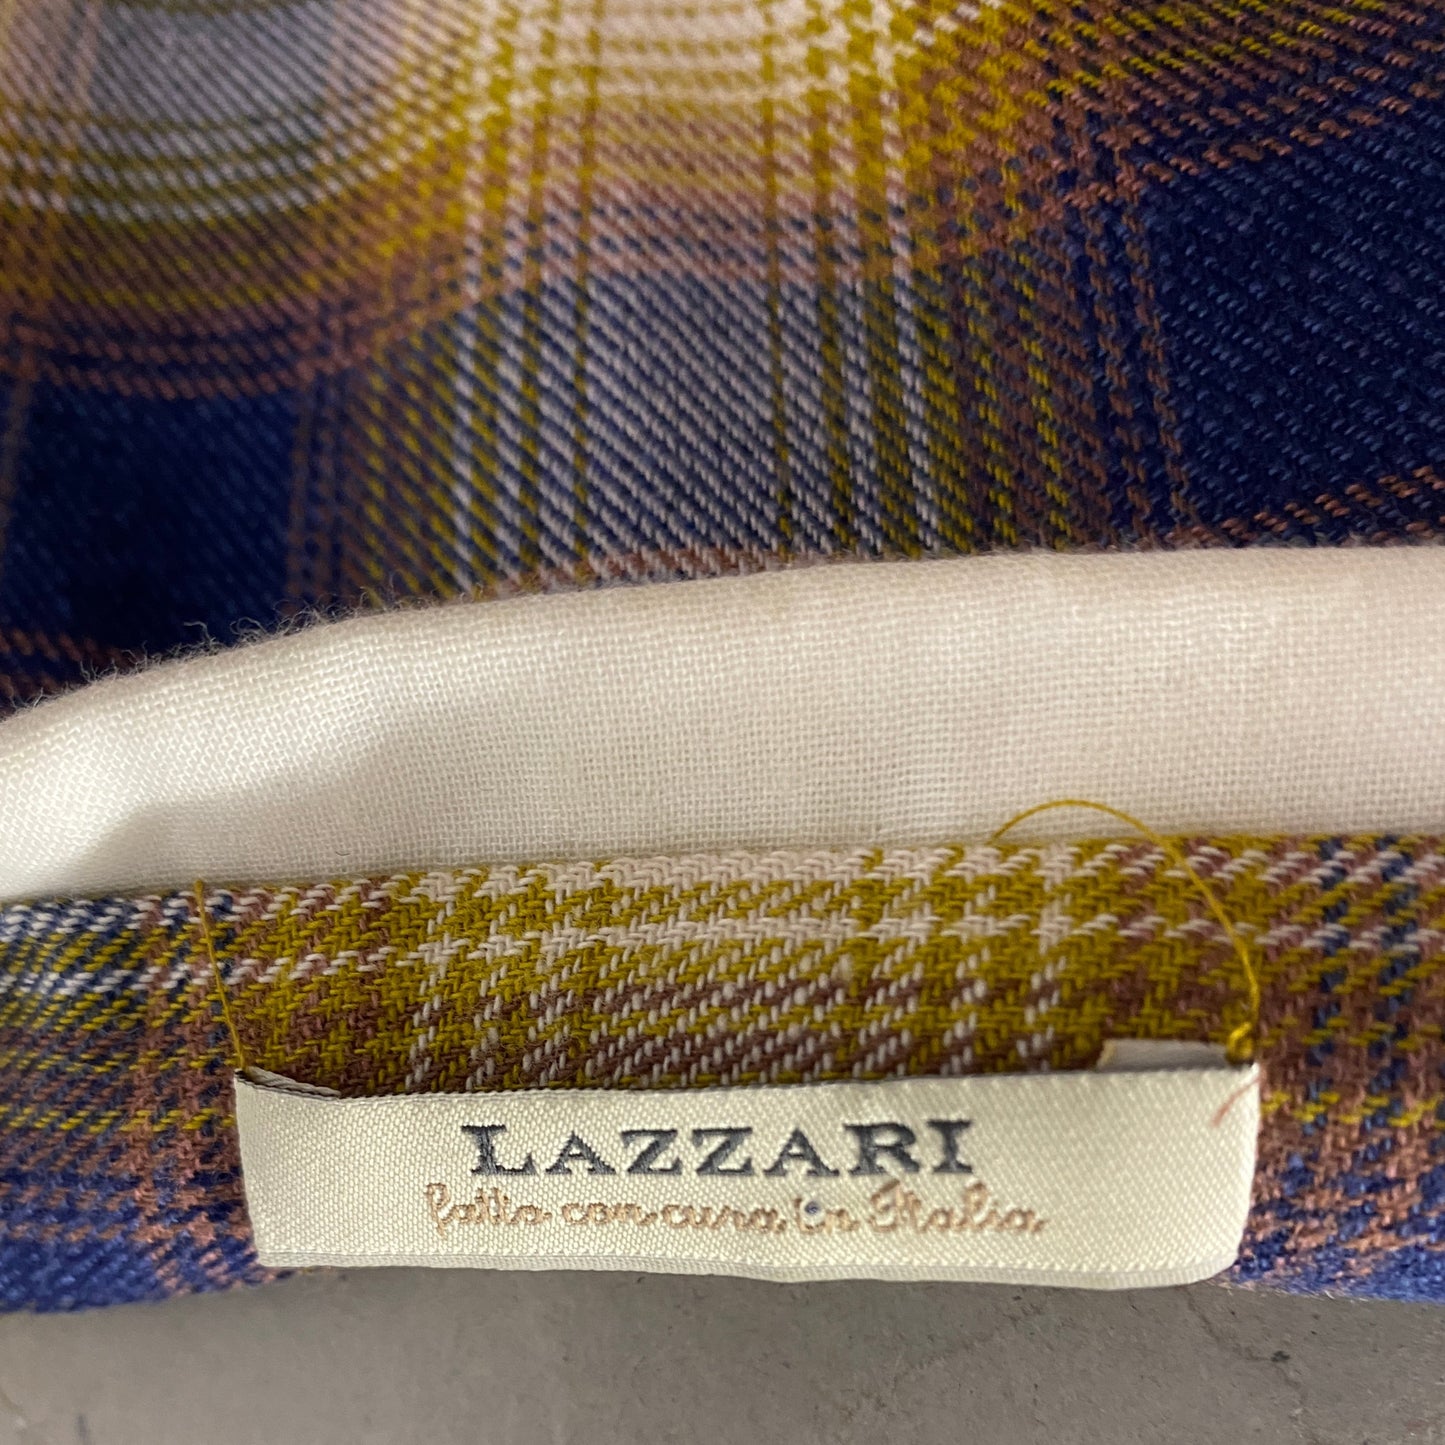 Lazzari Multi Coloured Button Shirt Dress 18